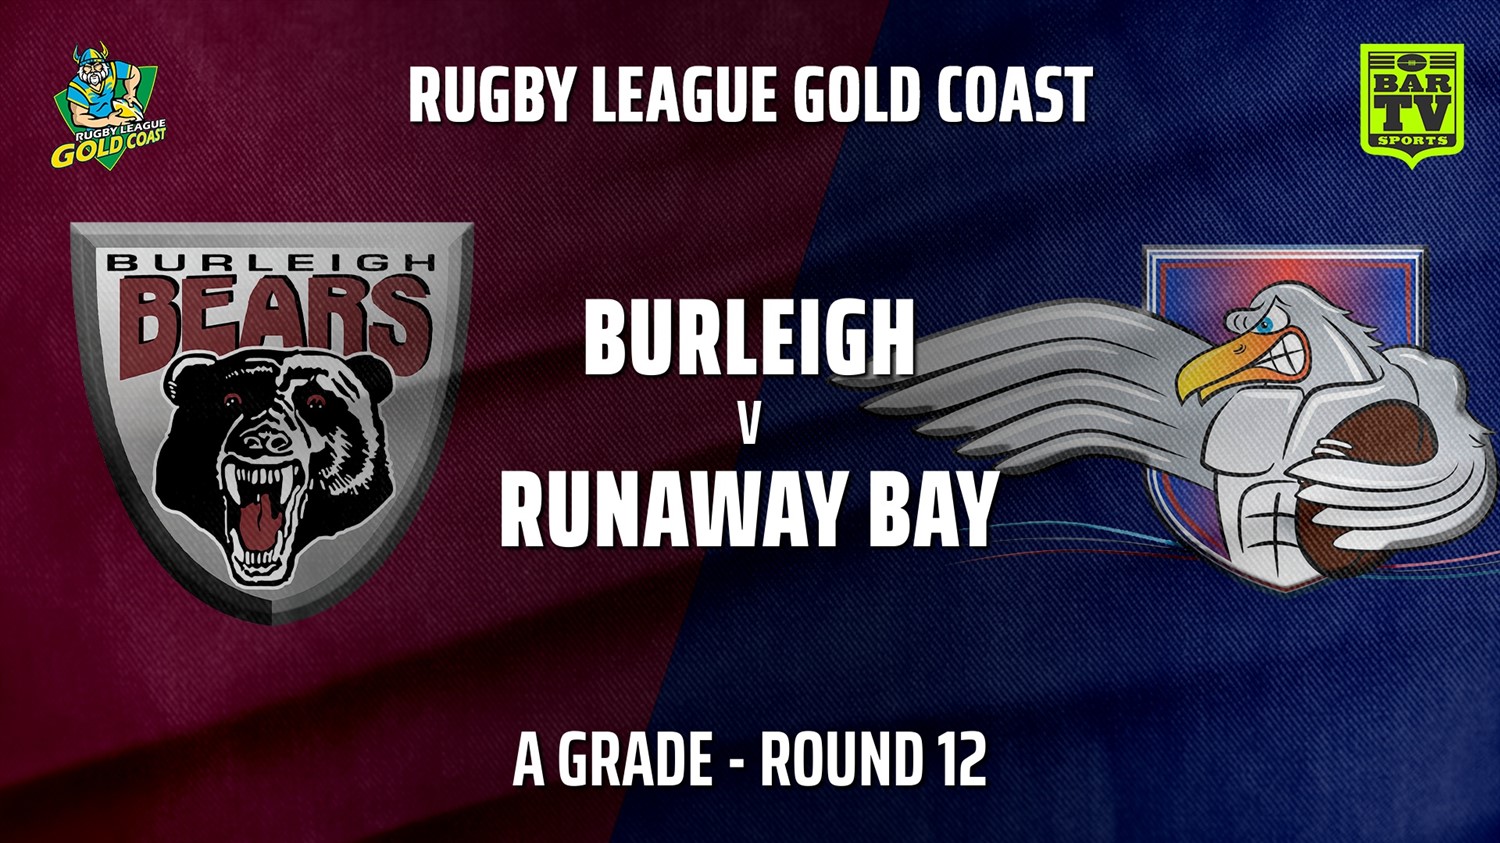 210905-Gold Coast Round 12 - A Grade - Burleigh Bears v Runaway Bay Minigame Slate Image